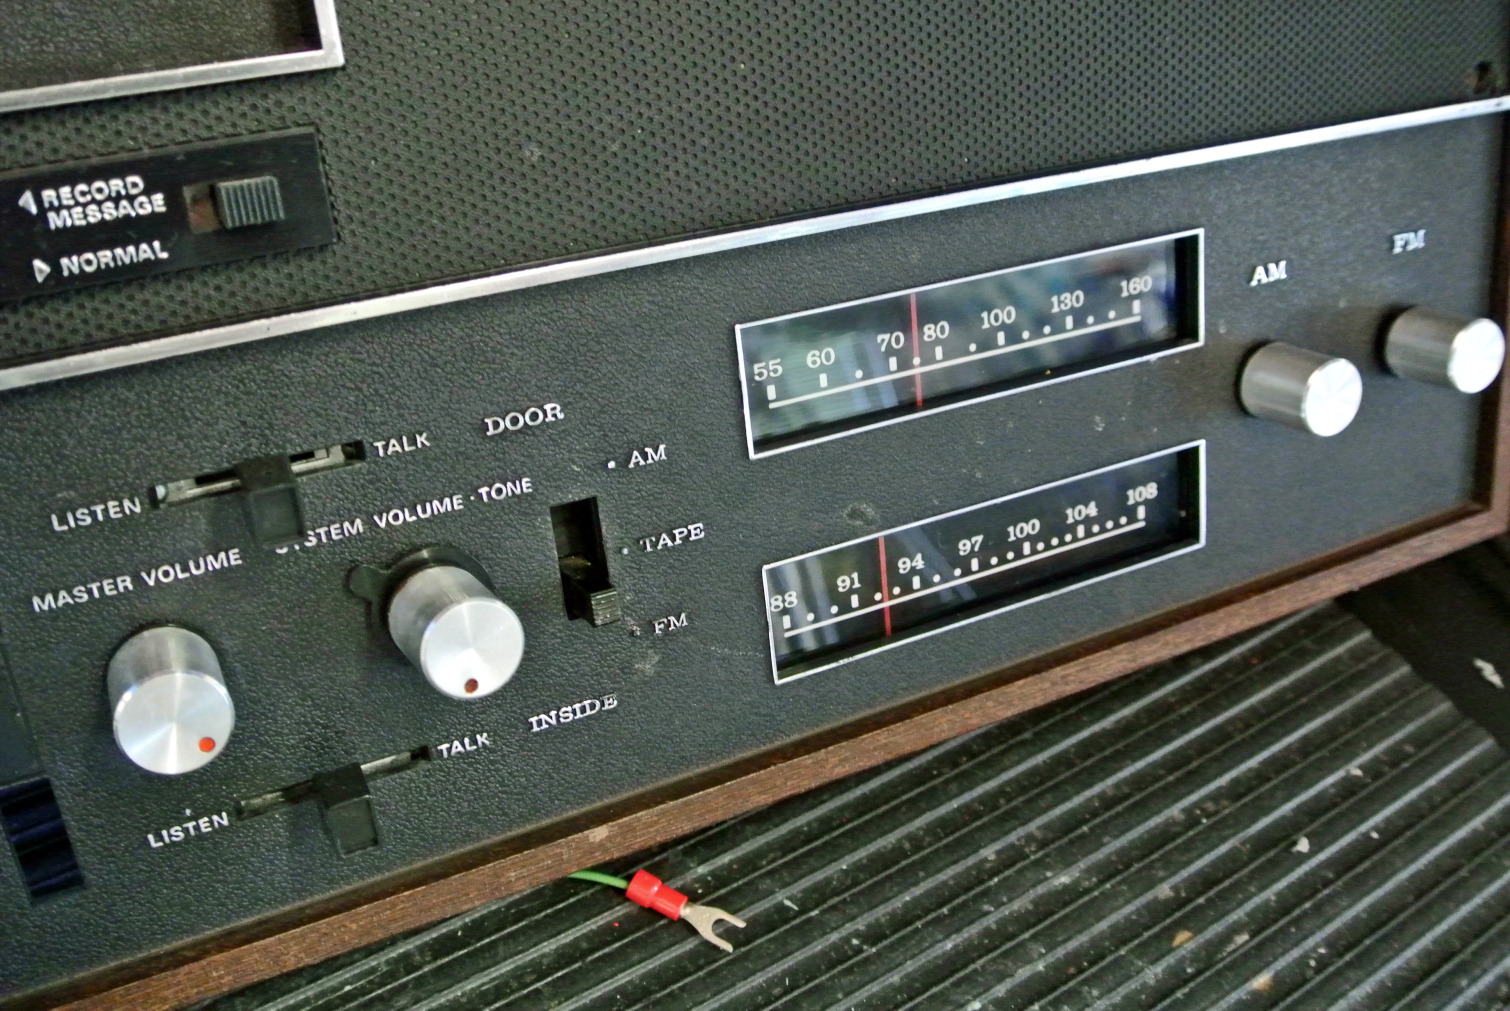 nutone model 2542 radio dial - intercom controls.jpg